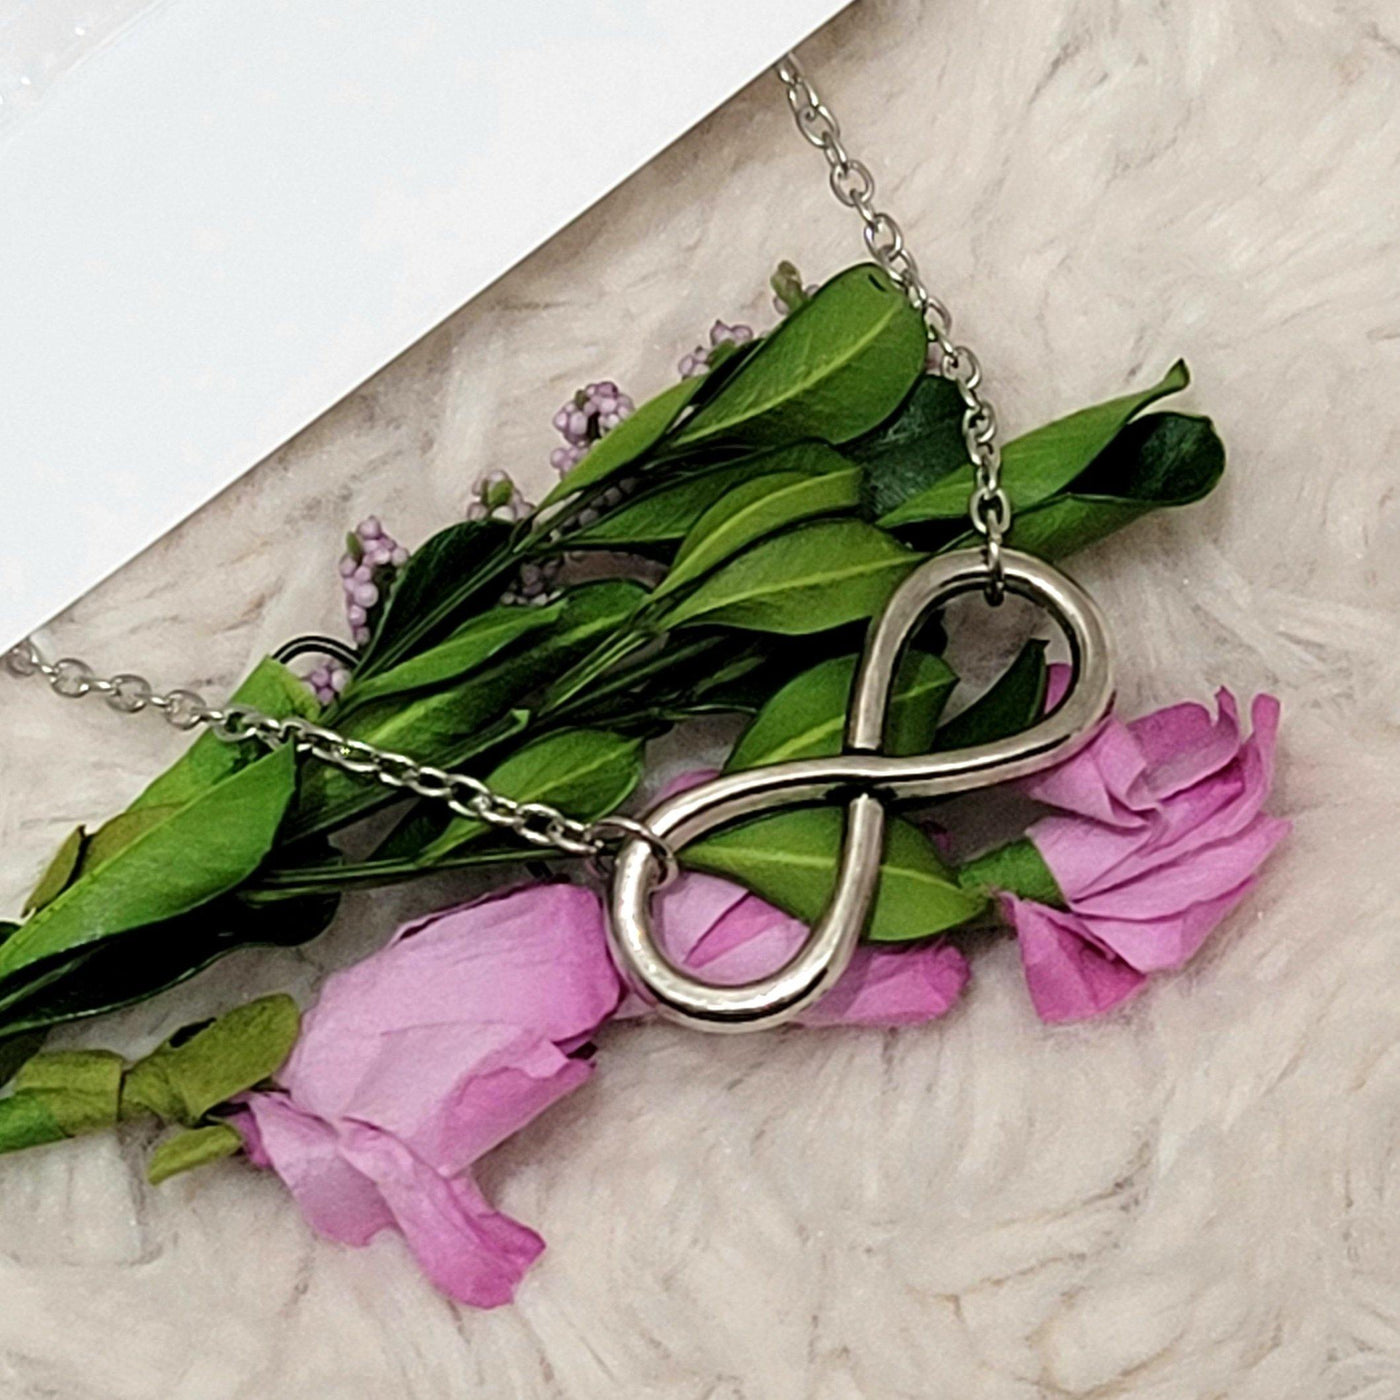 Silver Infinity Necklace - Accessories - dalia + jade 